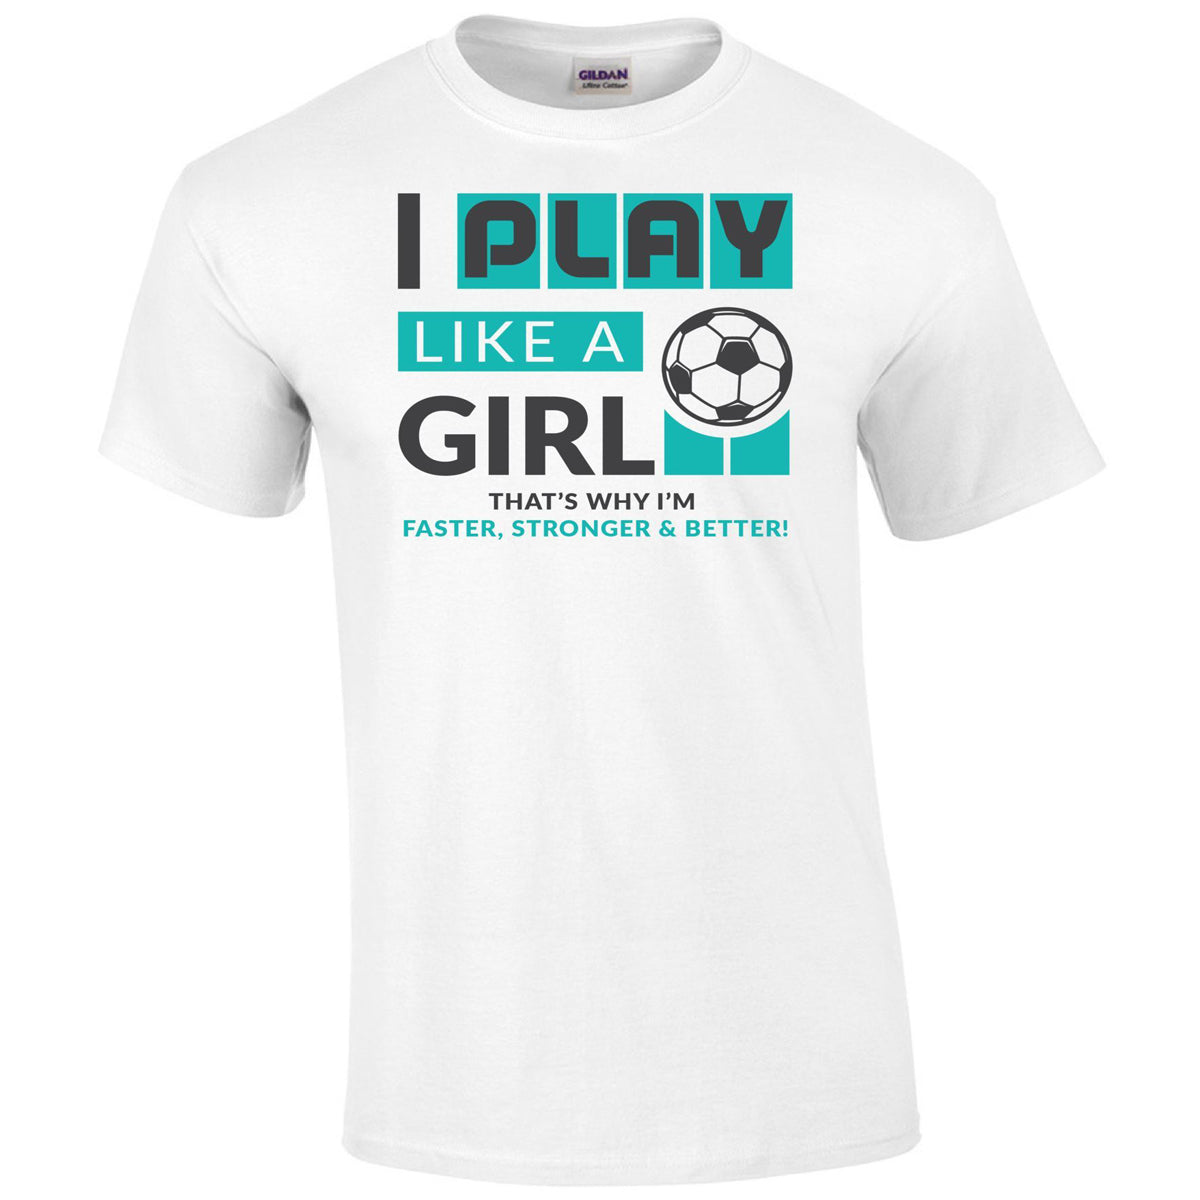 Play Like A Girl Soccer Tee Humorous Shirt 411 Youth Medium White Youth